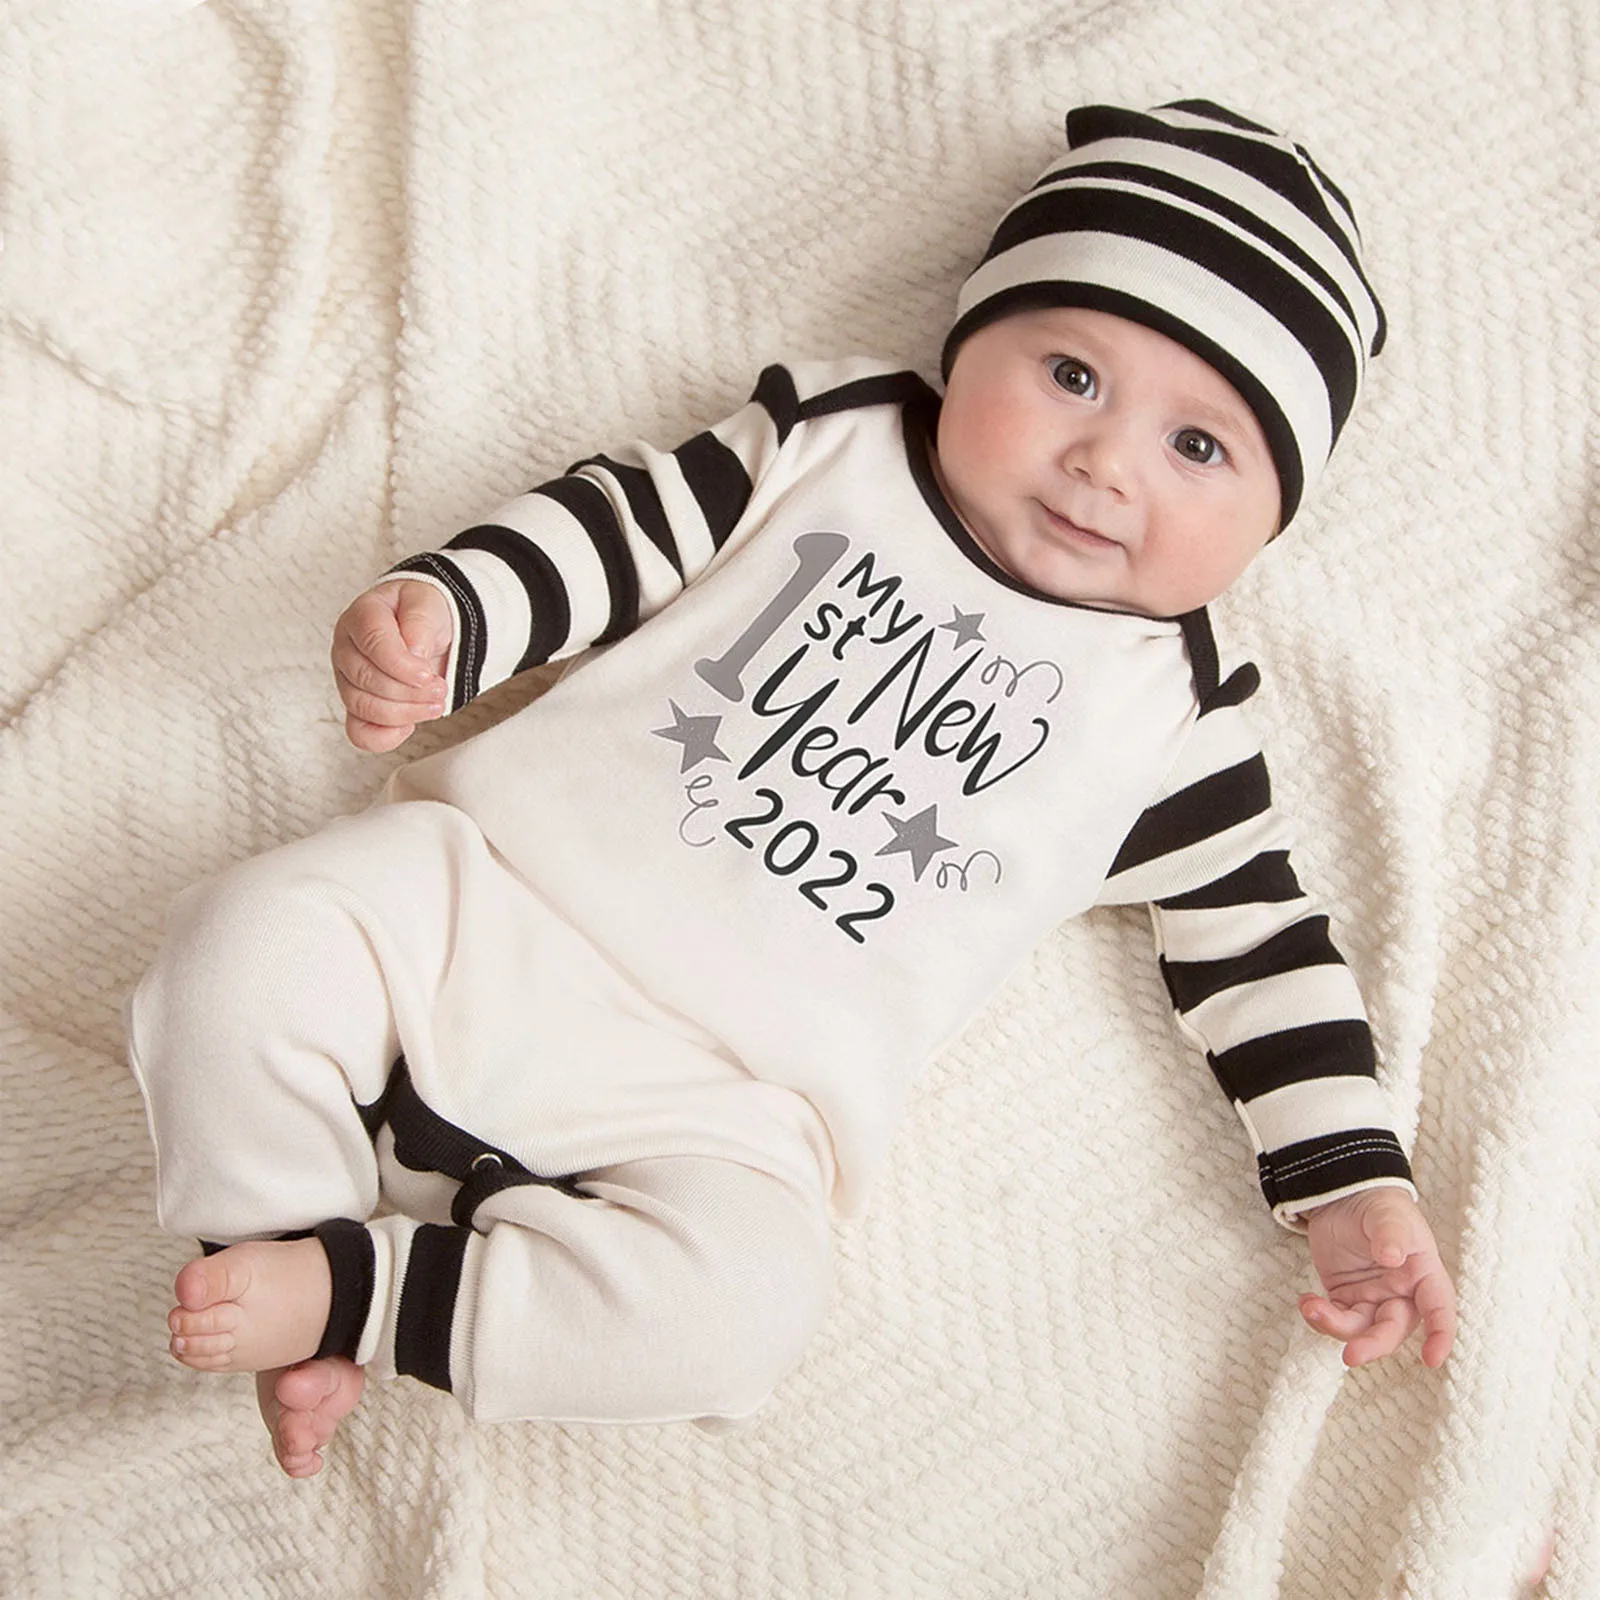 Newborn Infant Kids Baby Boys Girl Clothes Romper Jumpsuit Bodysuit Hat Outfits 